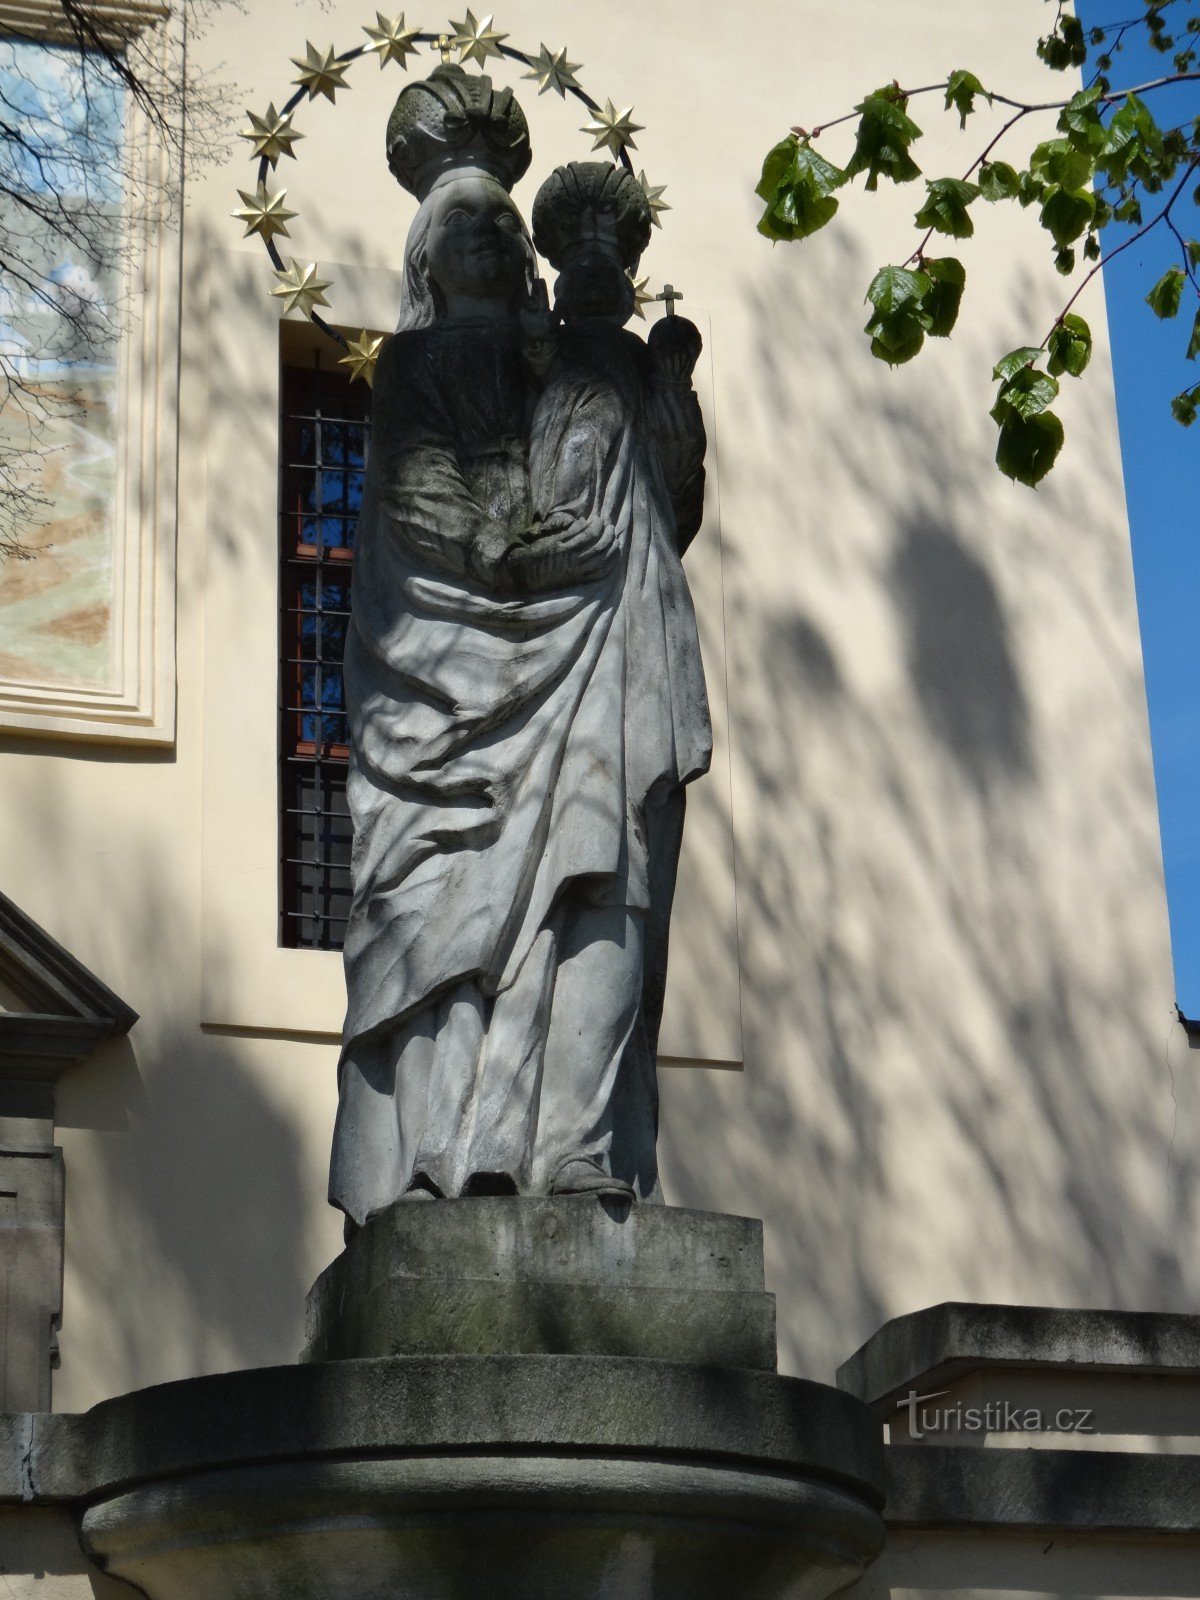 statue of the Virgin Mary - Queen of Heaven